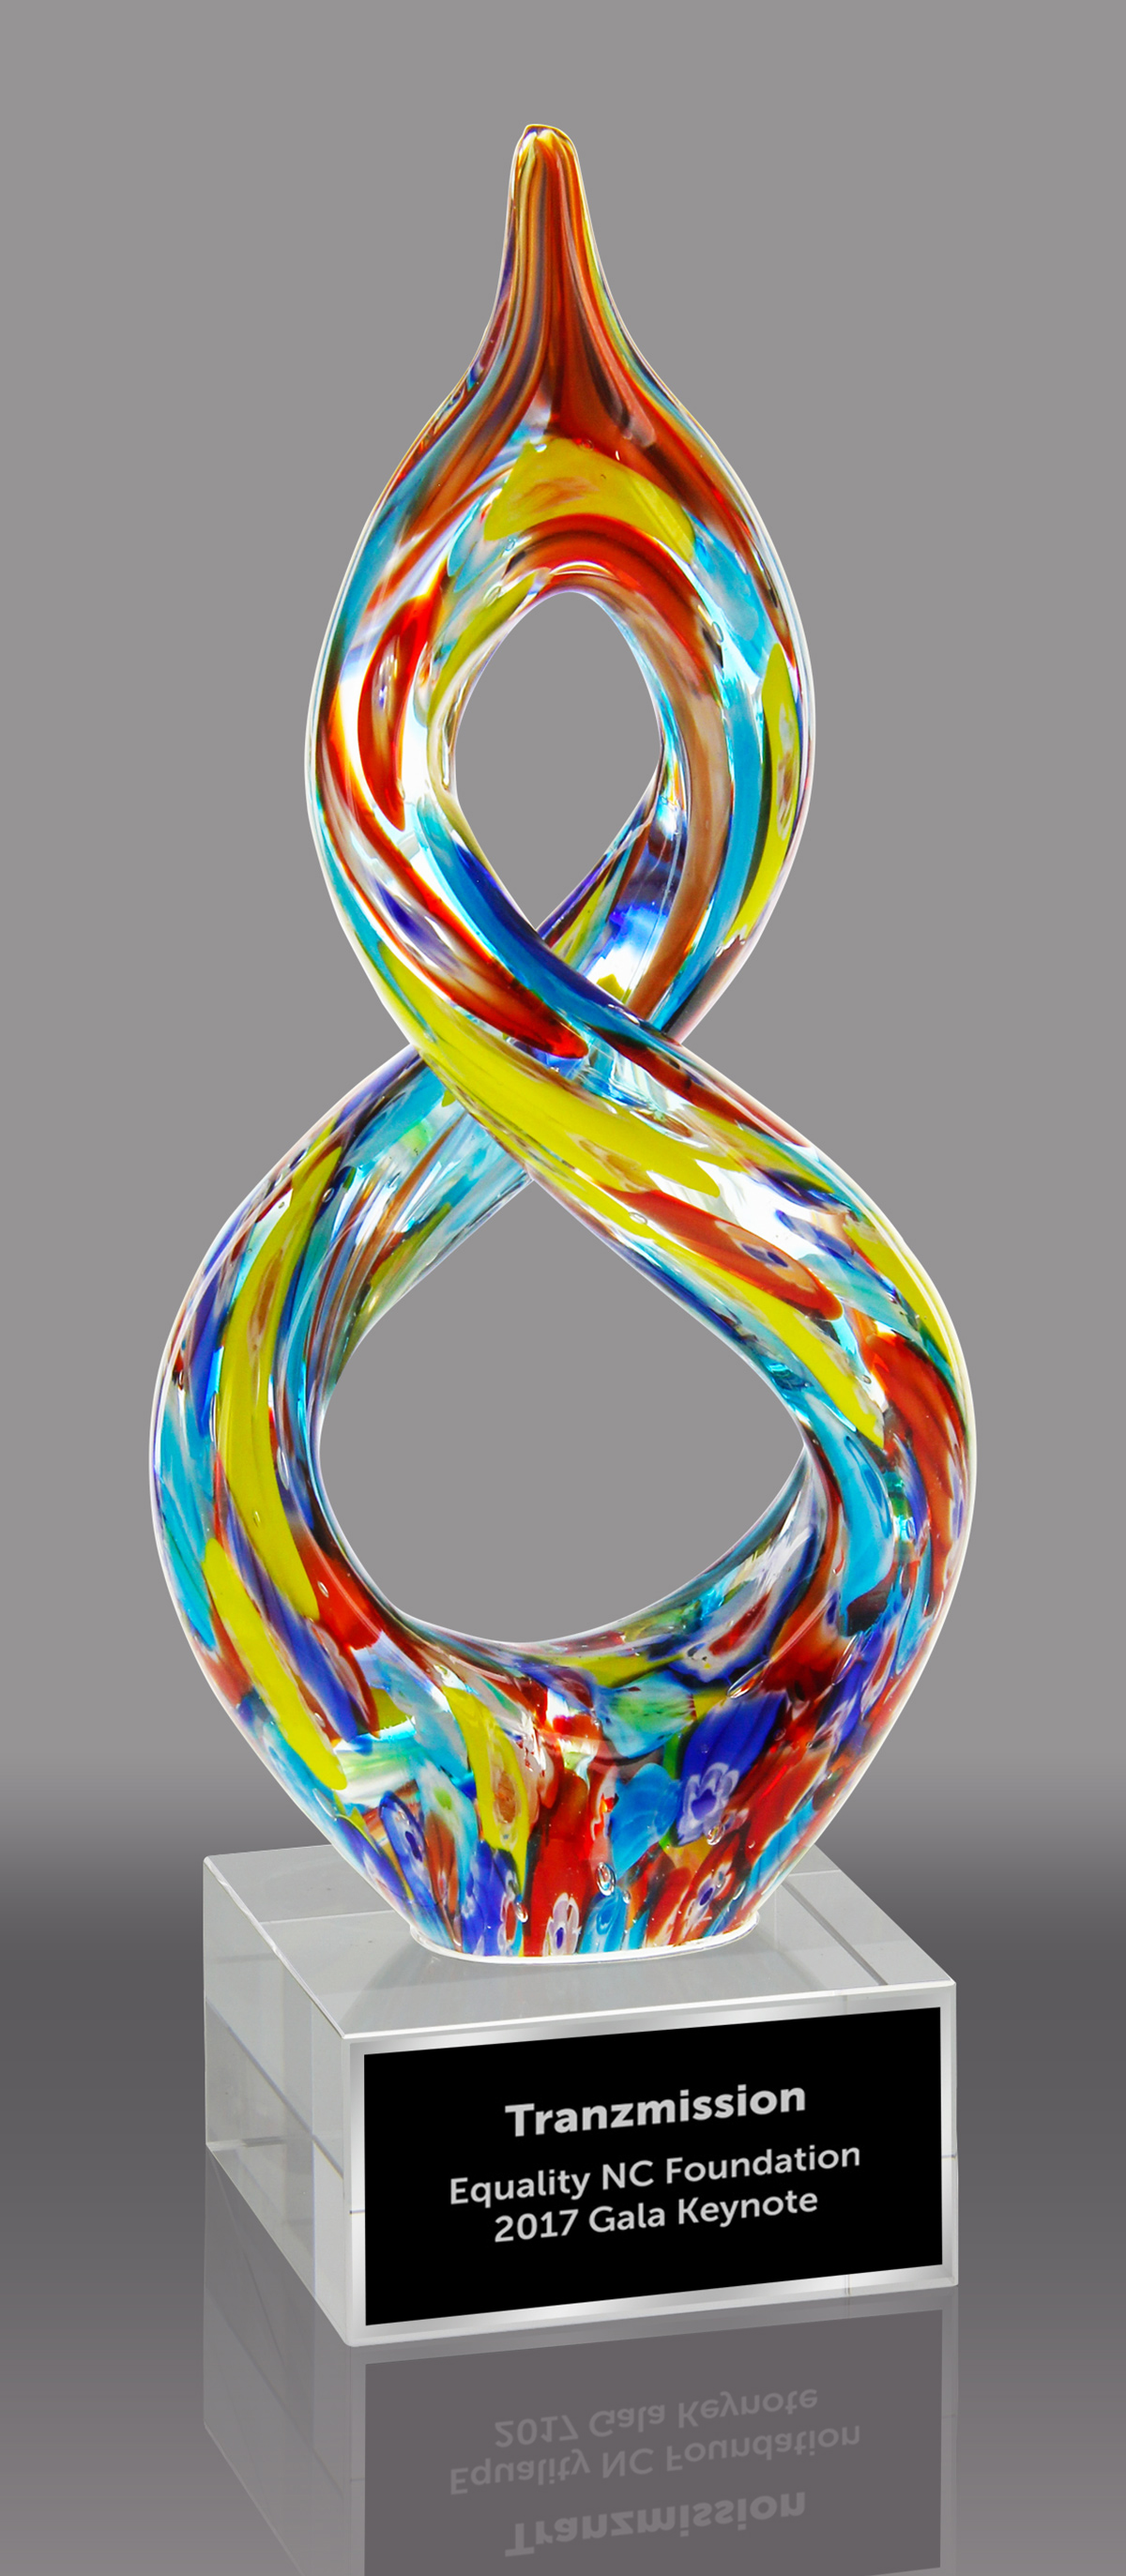 Helix Shaped Multi-Color Art Glass Award